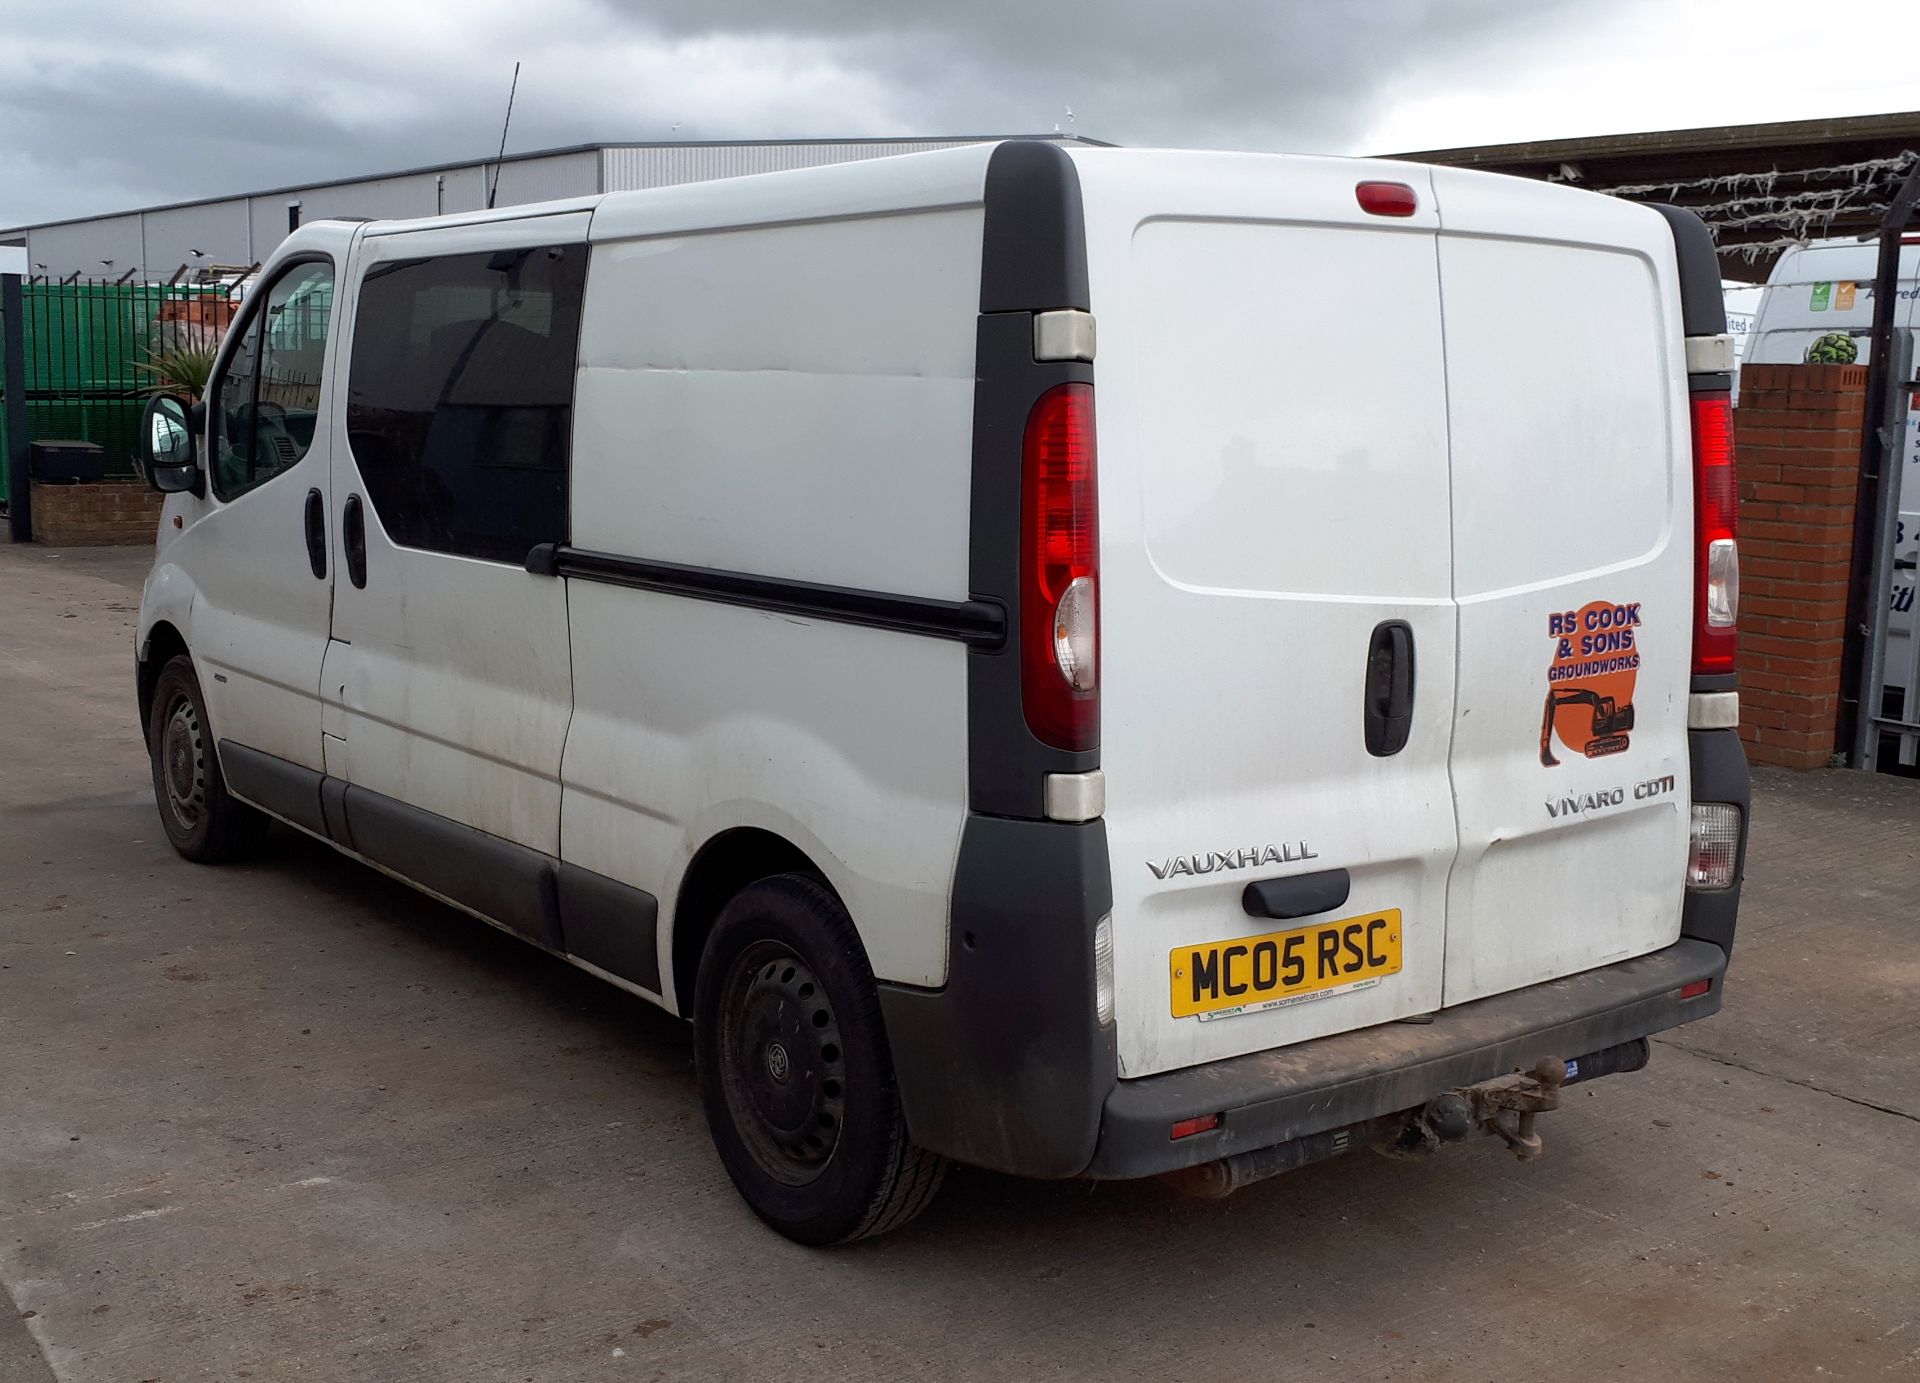 Vauxhall Vivaro 2900 CDTI LWB Panel Van, registration MC05 RSC, first registered 27 May 2014, V5 - Image 3 of 11